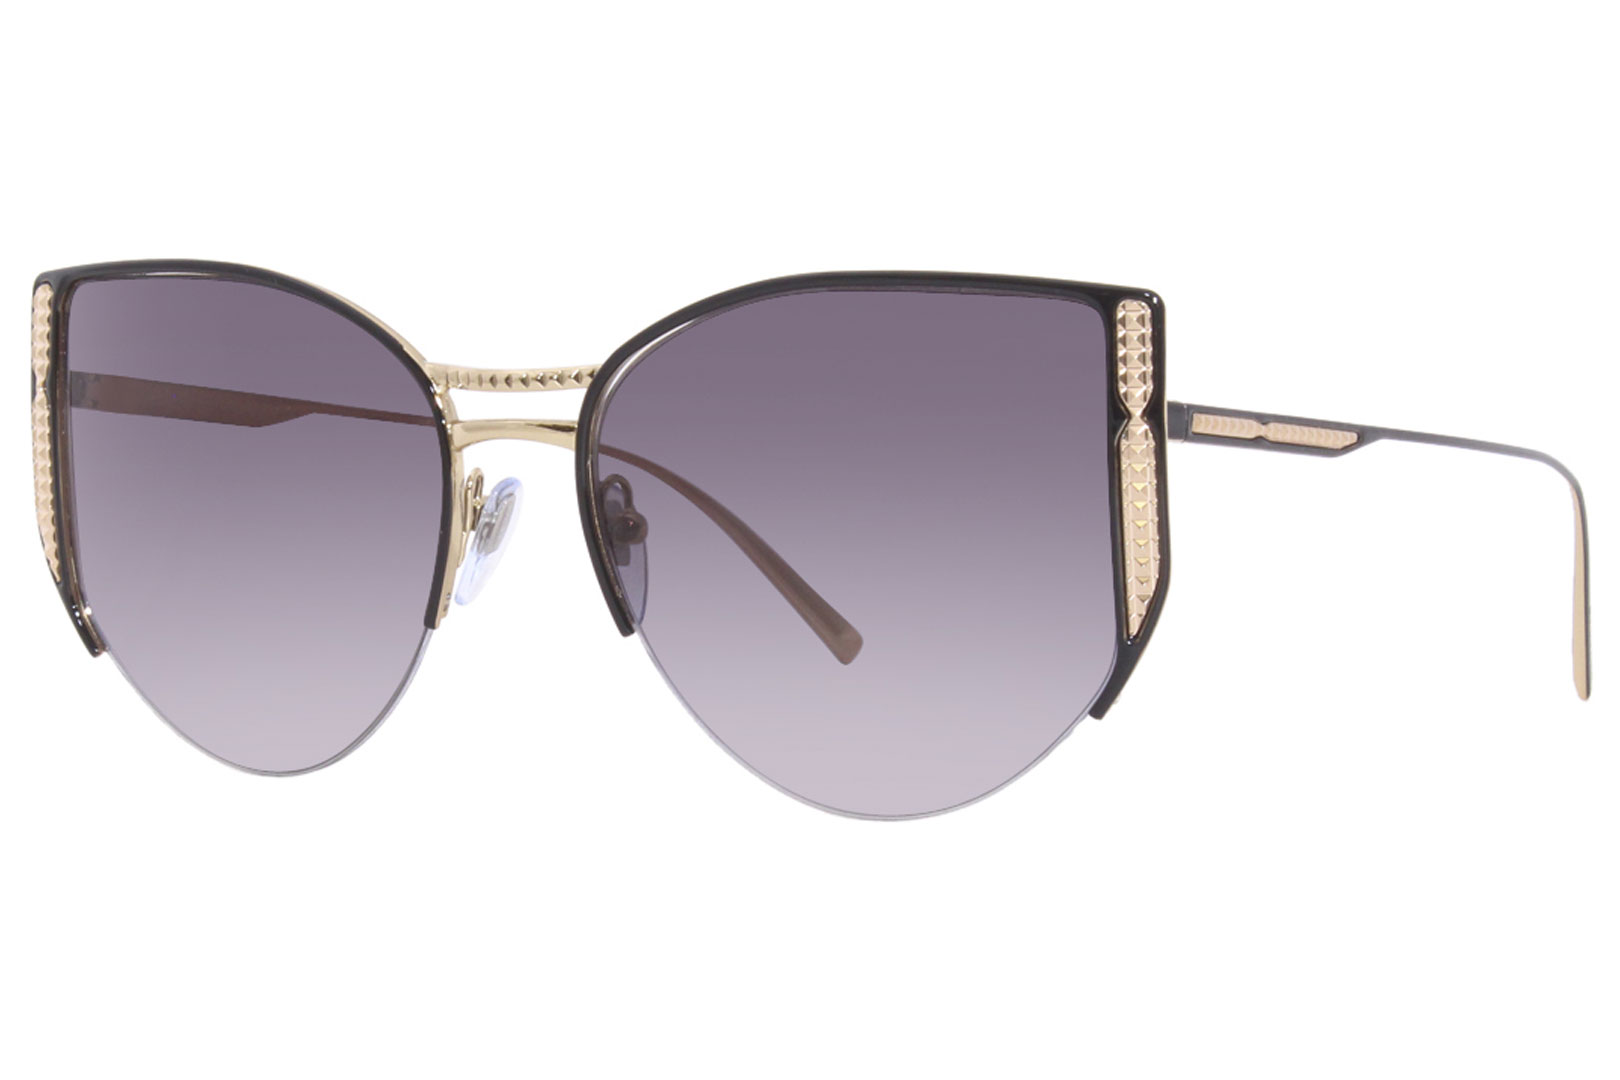 Bvlgari 6170 2023/8G Sunglasses Women's Pink Gold-Black/Grey Gradient ...